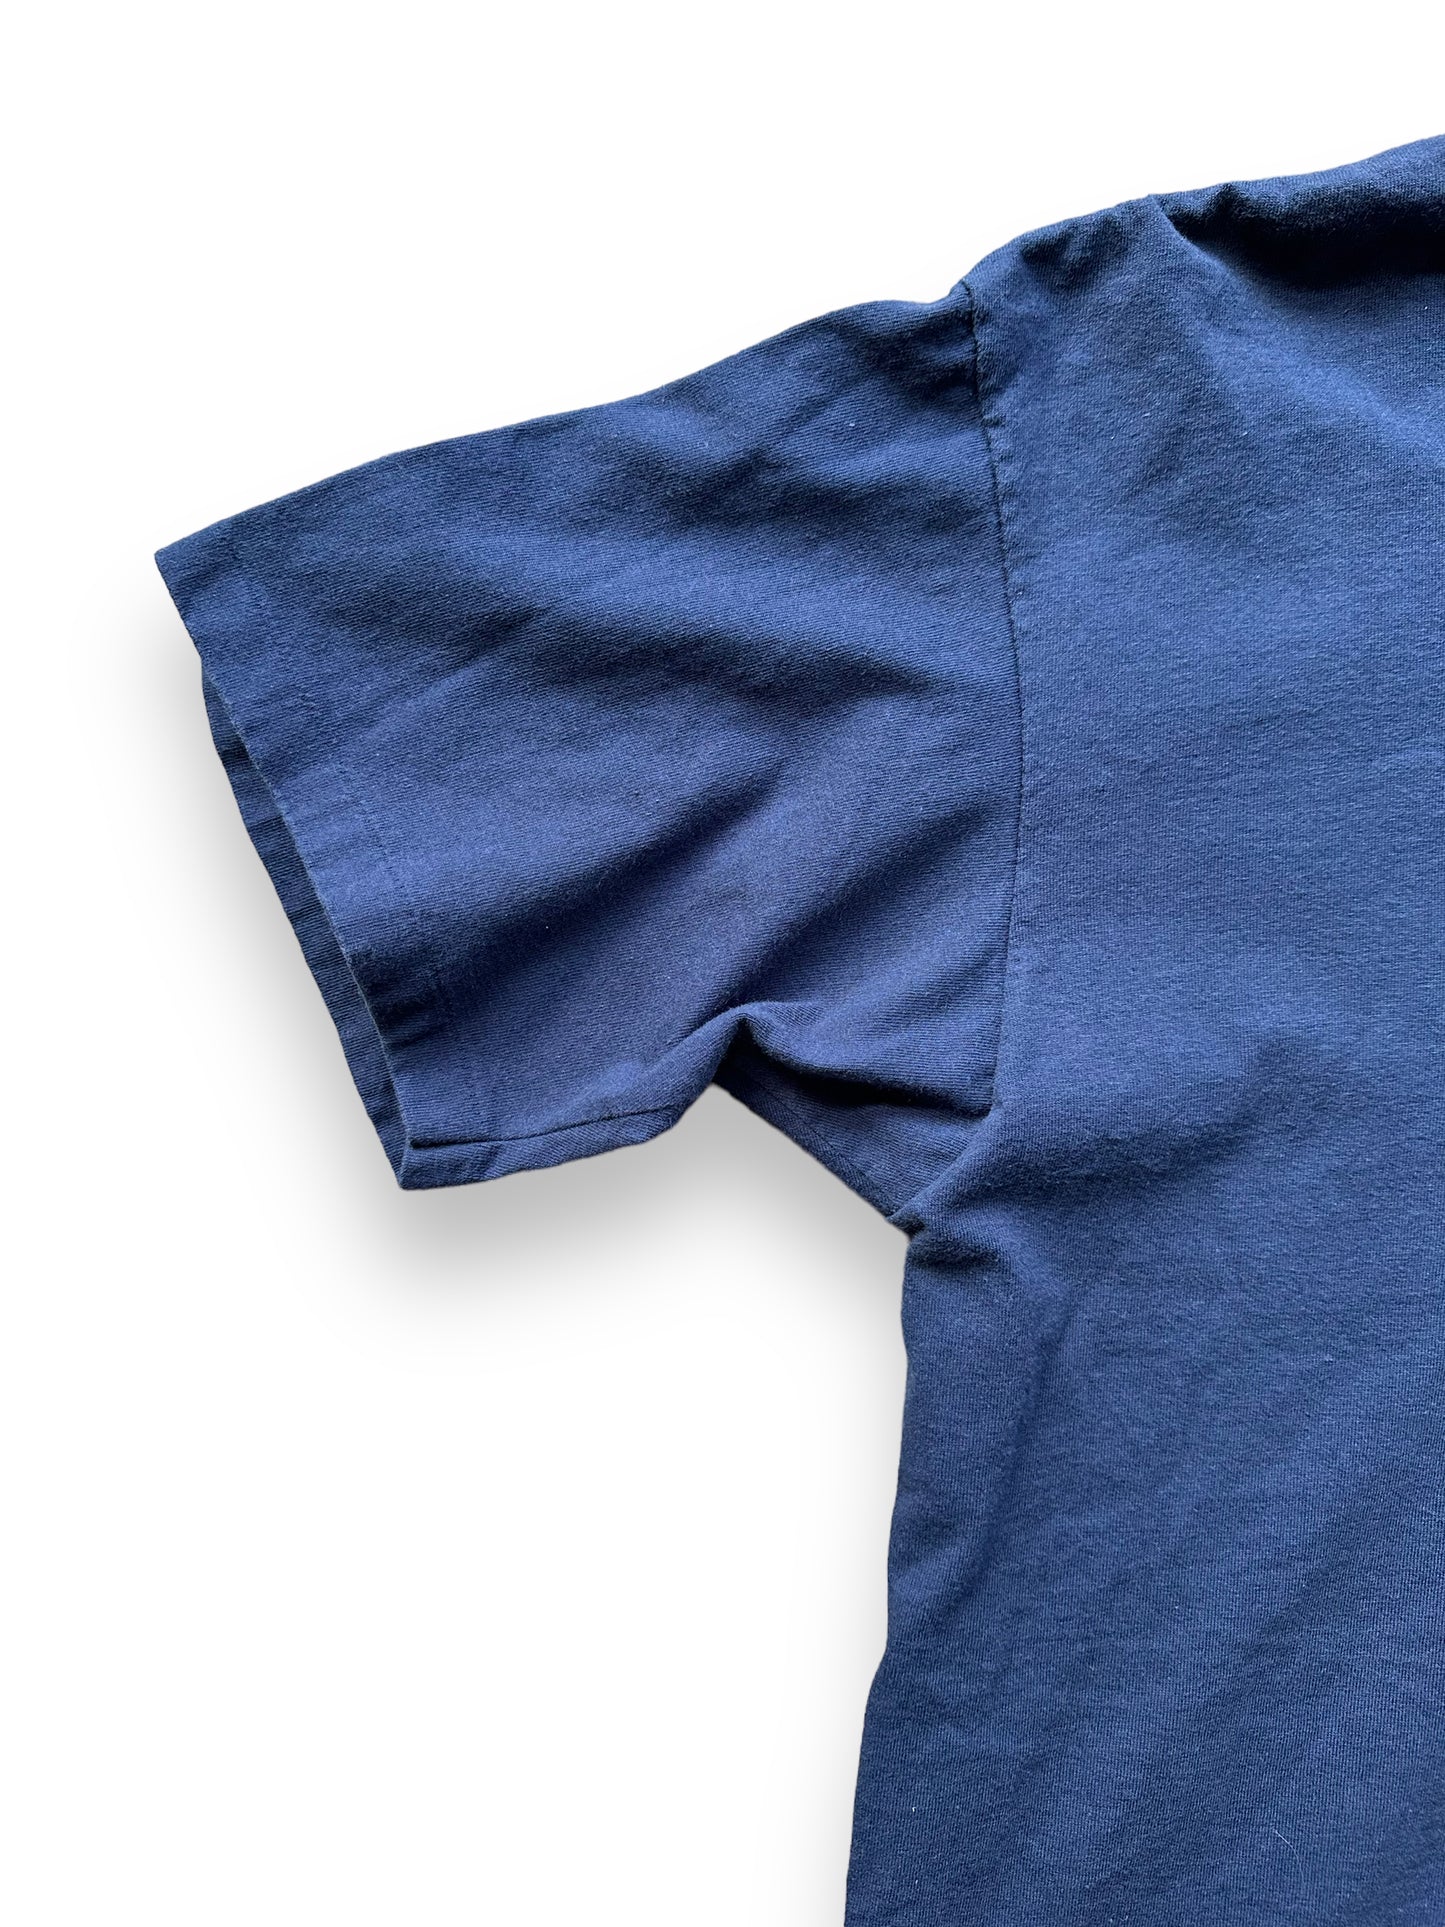 Single Stitch Sleeve on Vintage Bowling Tee SZ XL | Vintage Single Stitch T-Shirts Seattle | Barn Owl Vintage Tees Seattle